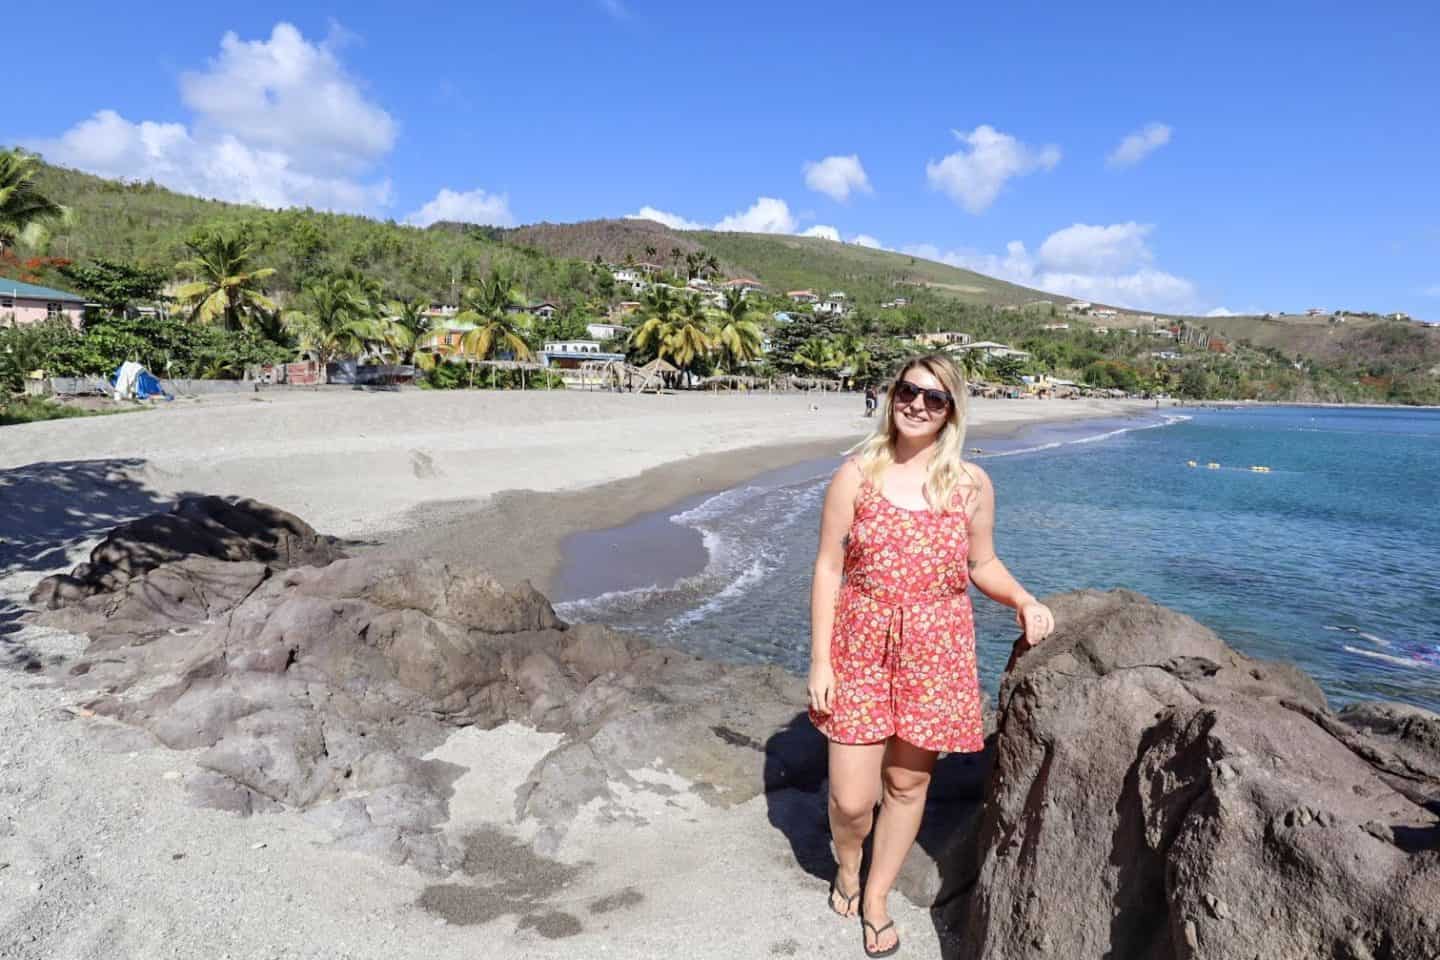 The Wandering Quinn Travel Blog dominica travel guide, ellie quinn on mero beach dominica